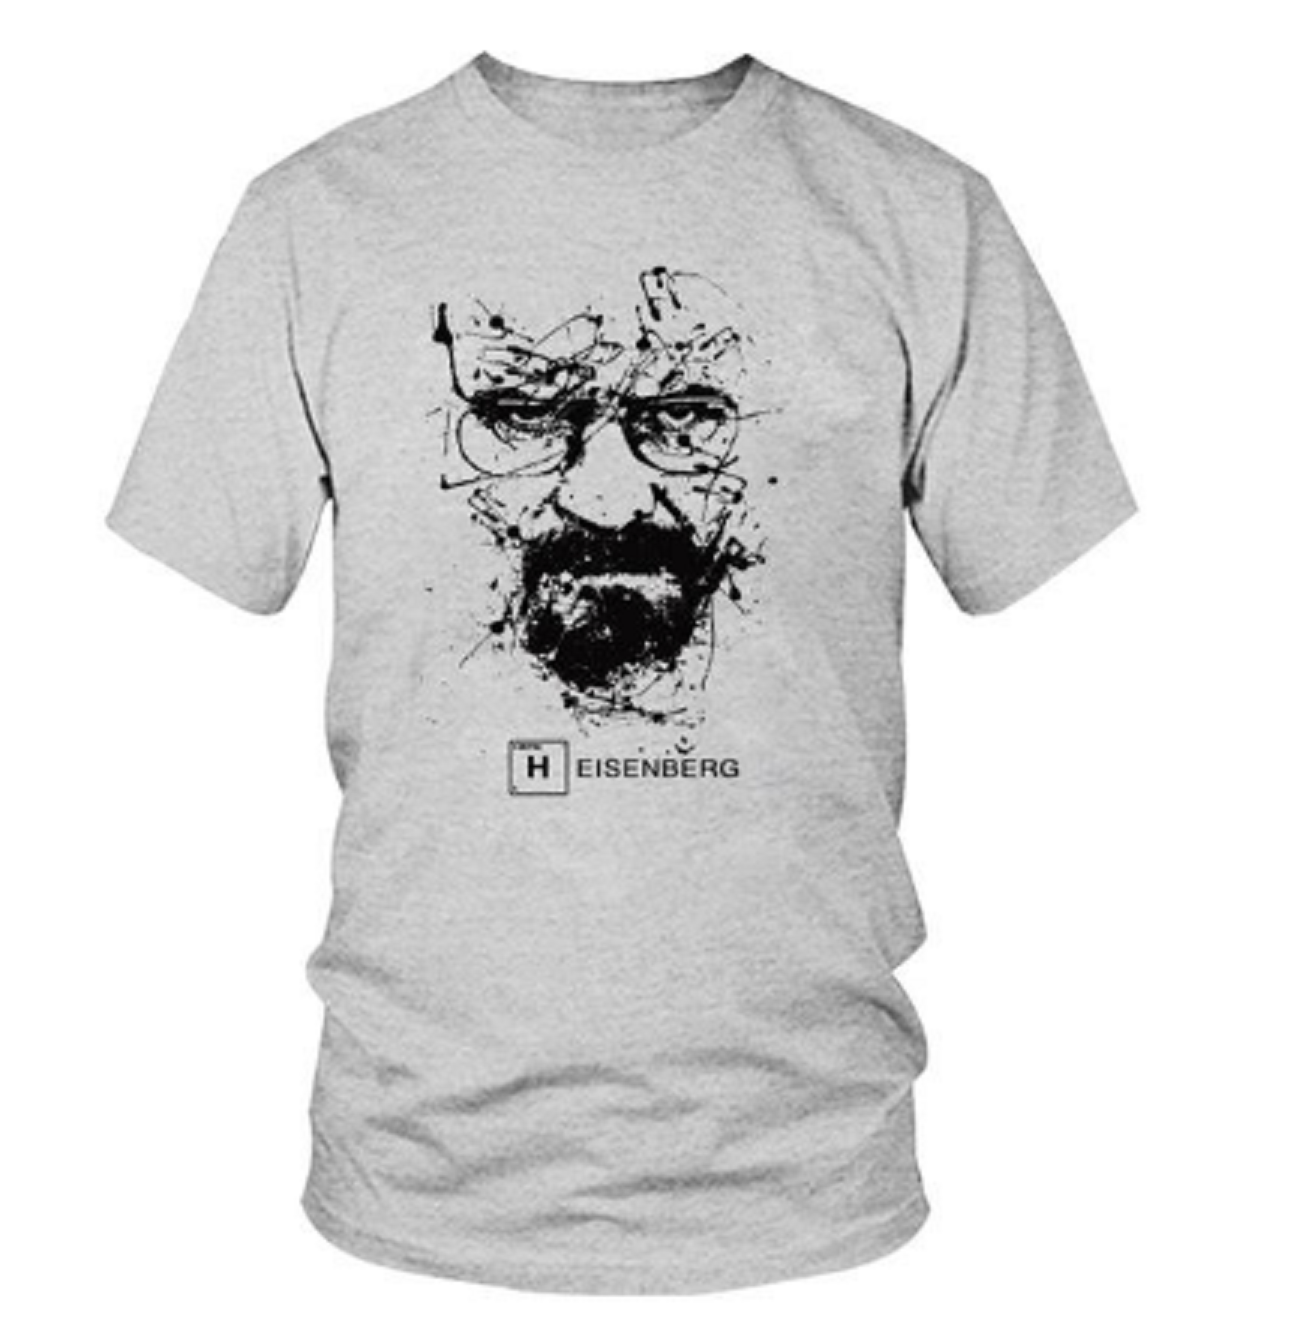 Camiseta Heisenberg de Breaking Bad solo 1,5€